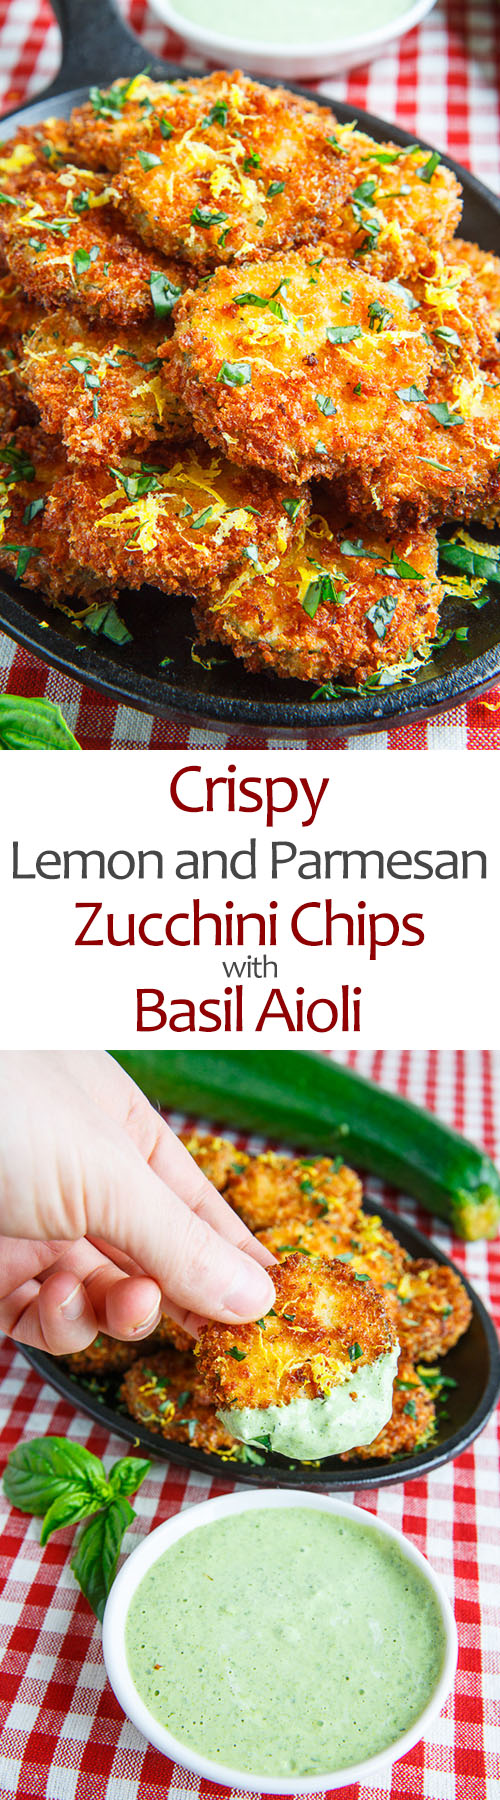 Crispy Lemon Parmesan Zucchini Chips with Basil Aioli